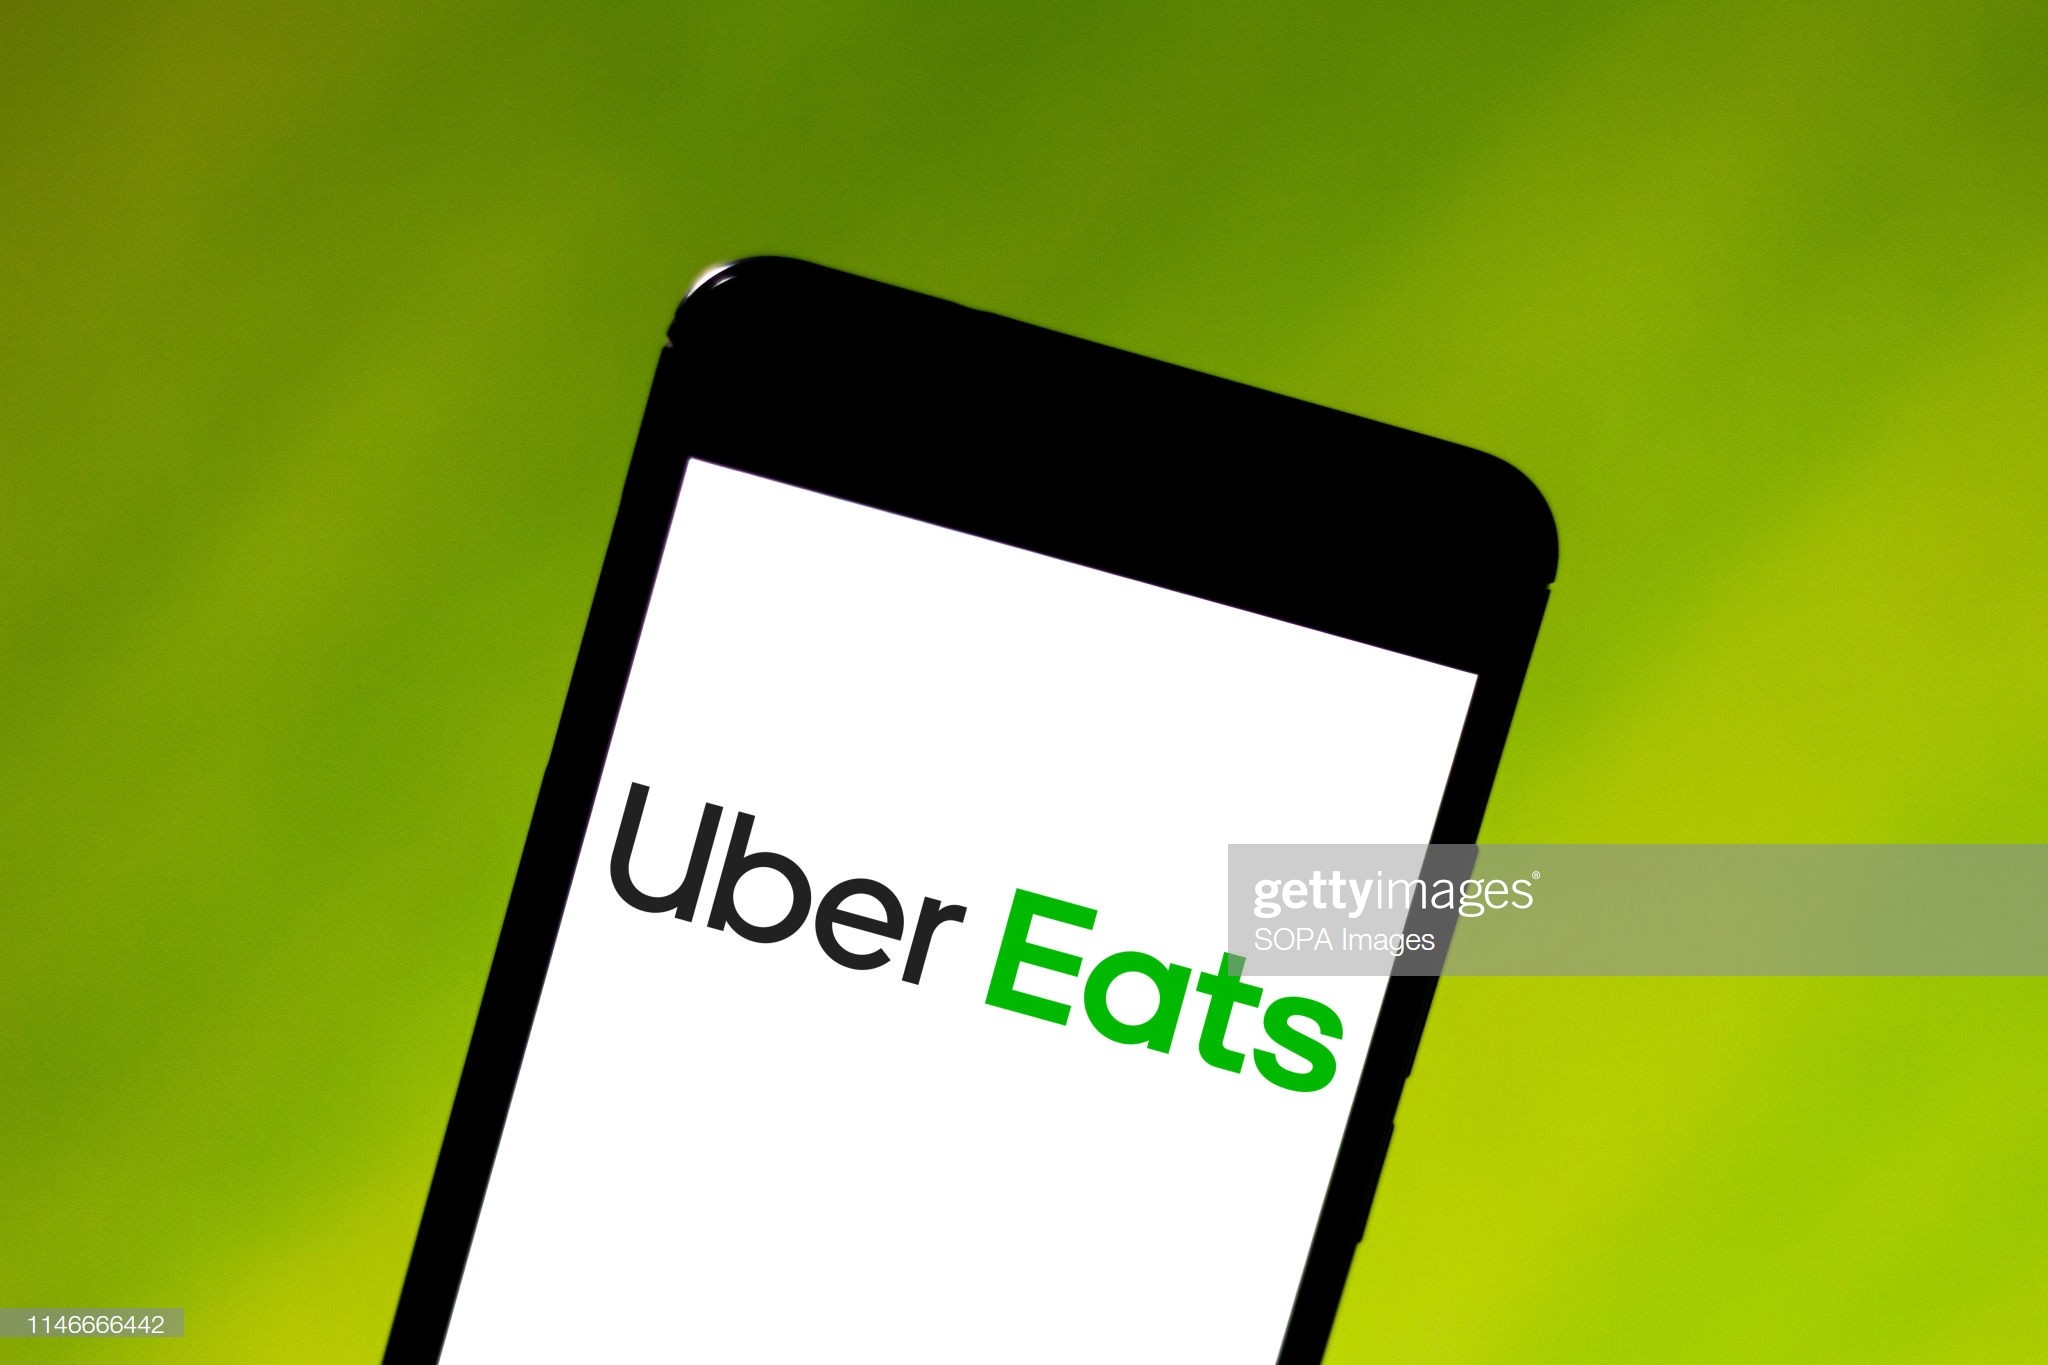 Uber Eats hd image